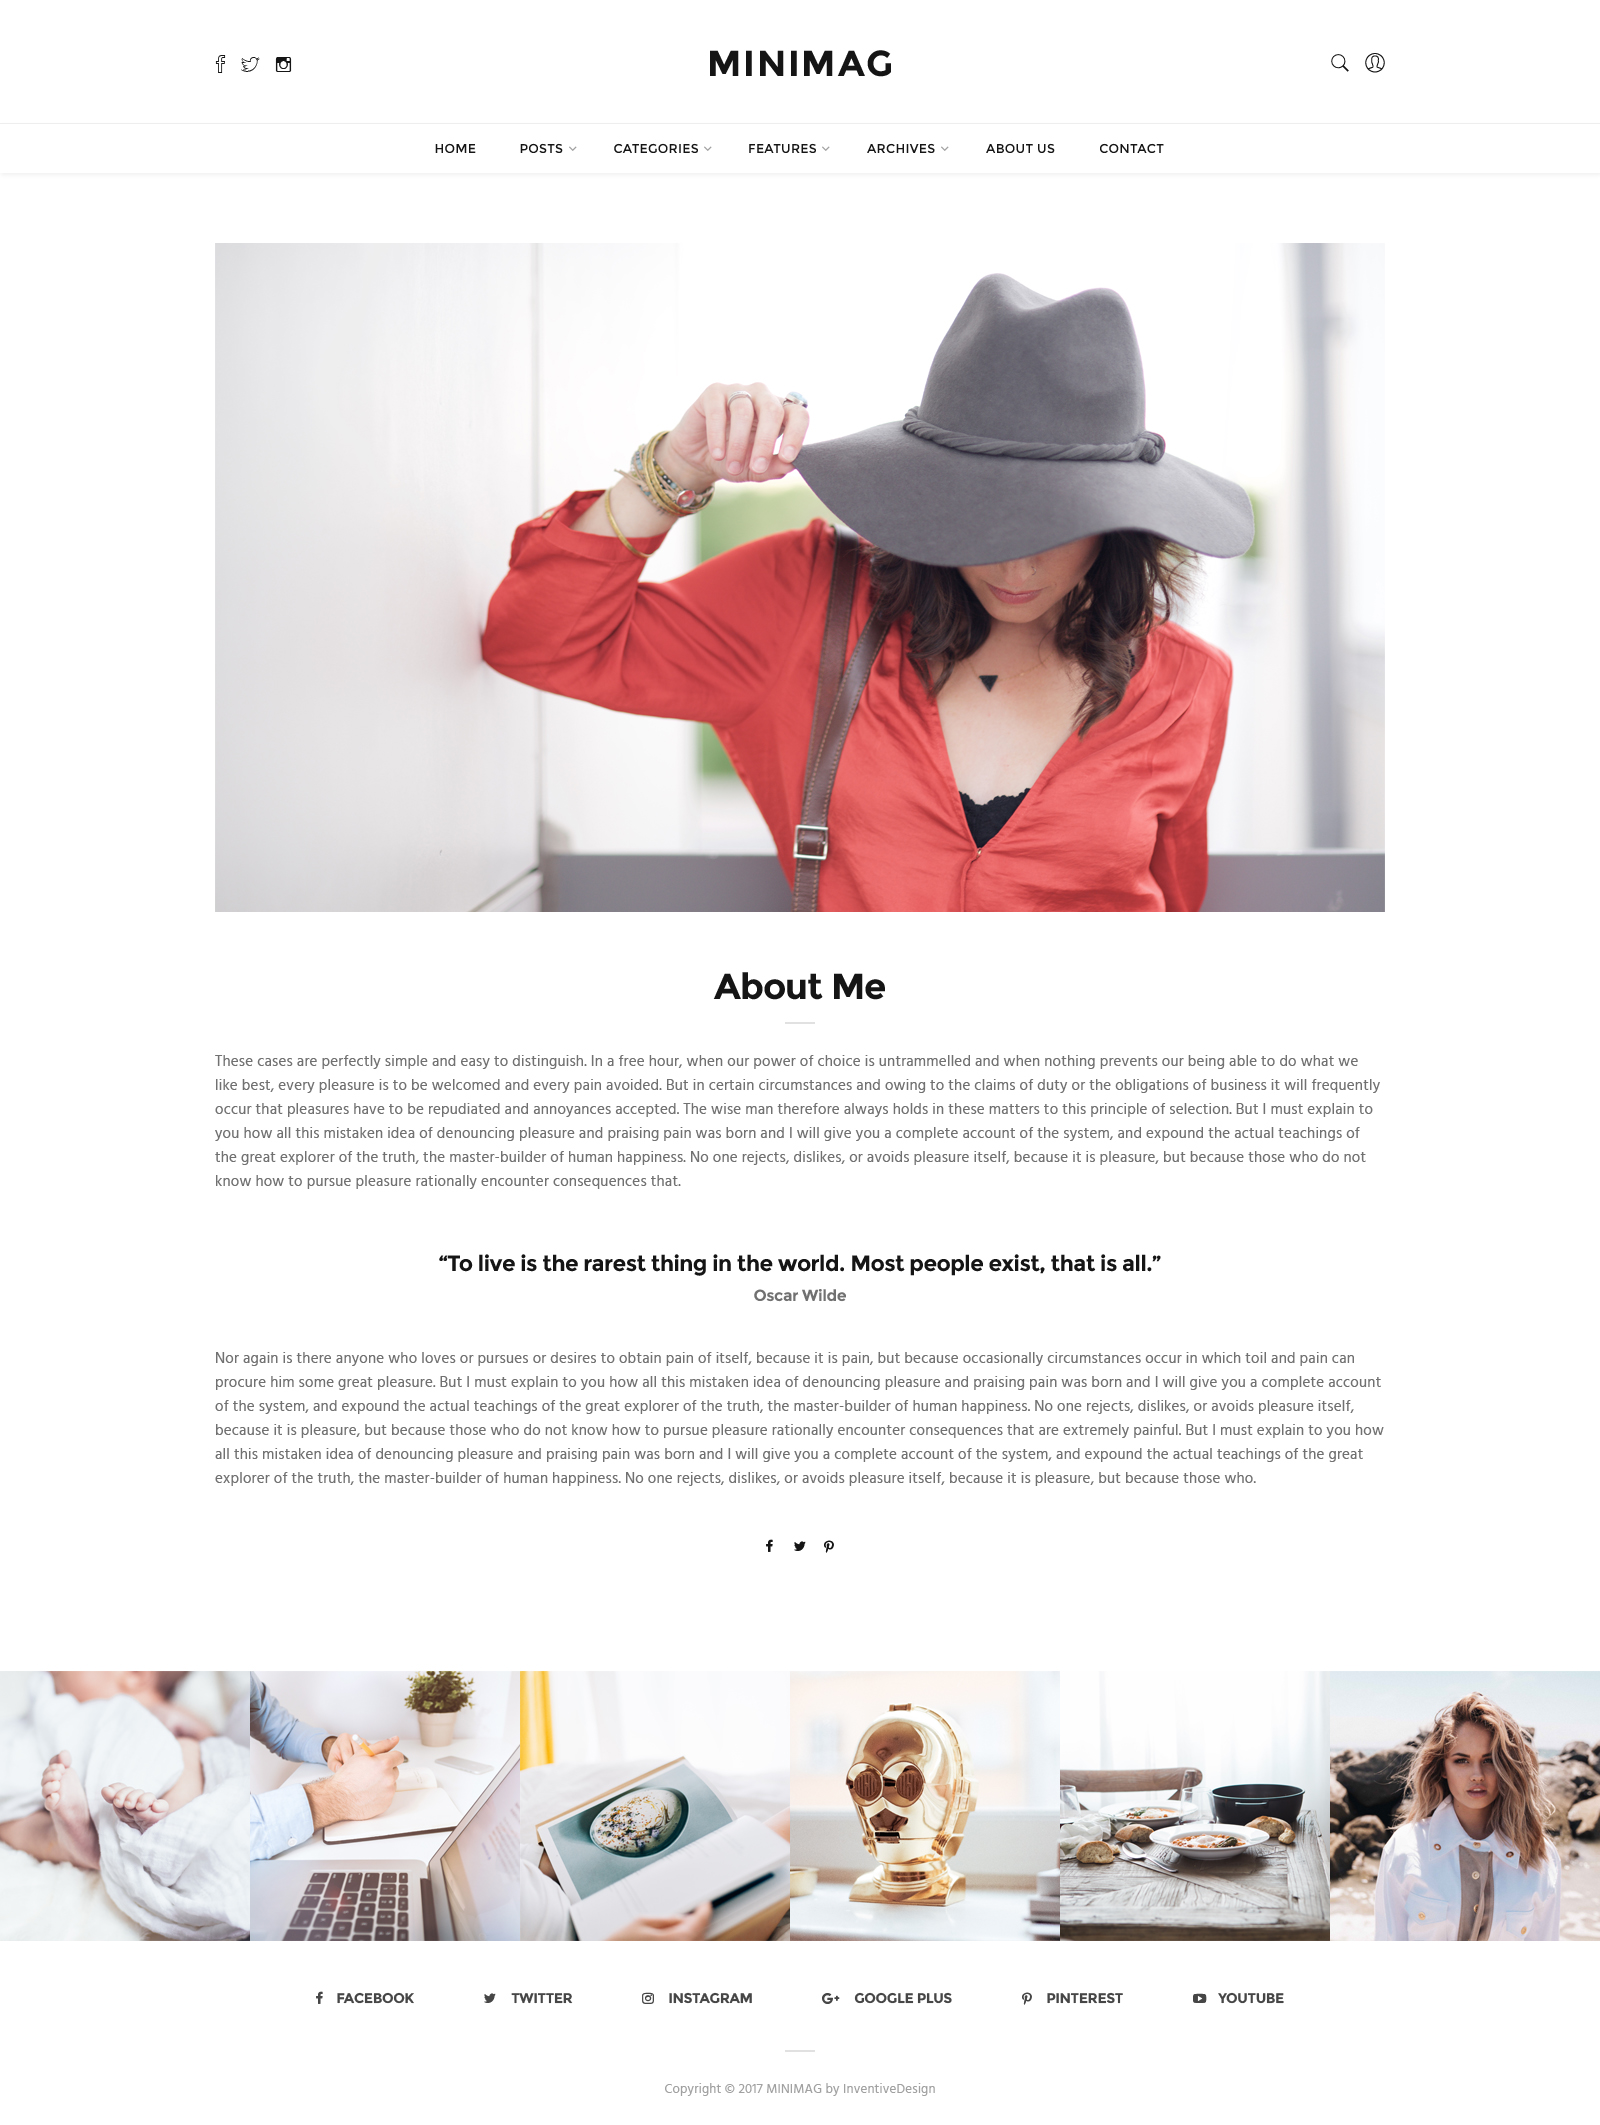 MINIMAG - Magazine & Blog PSD Template by InventiveDesign | ThemeForest